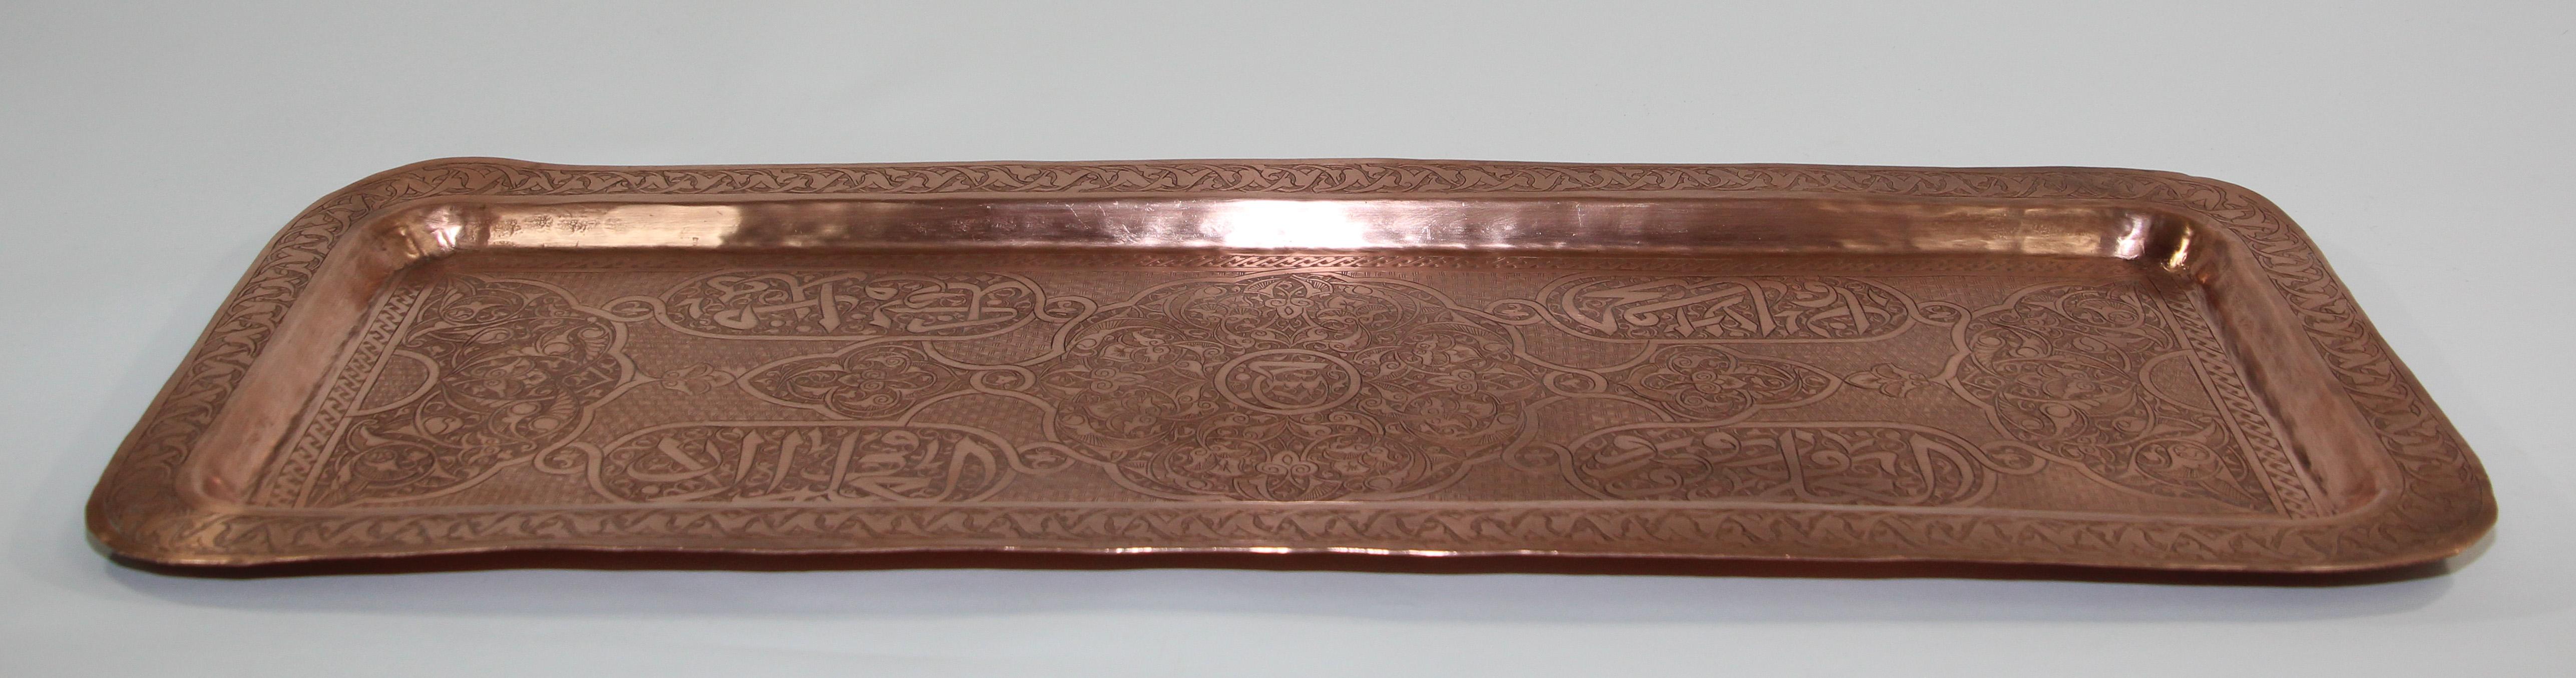 antique copper serving tray